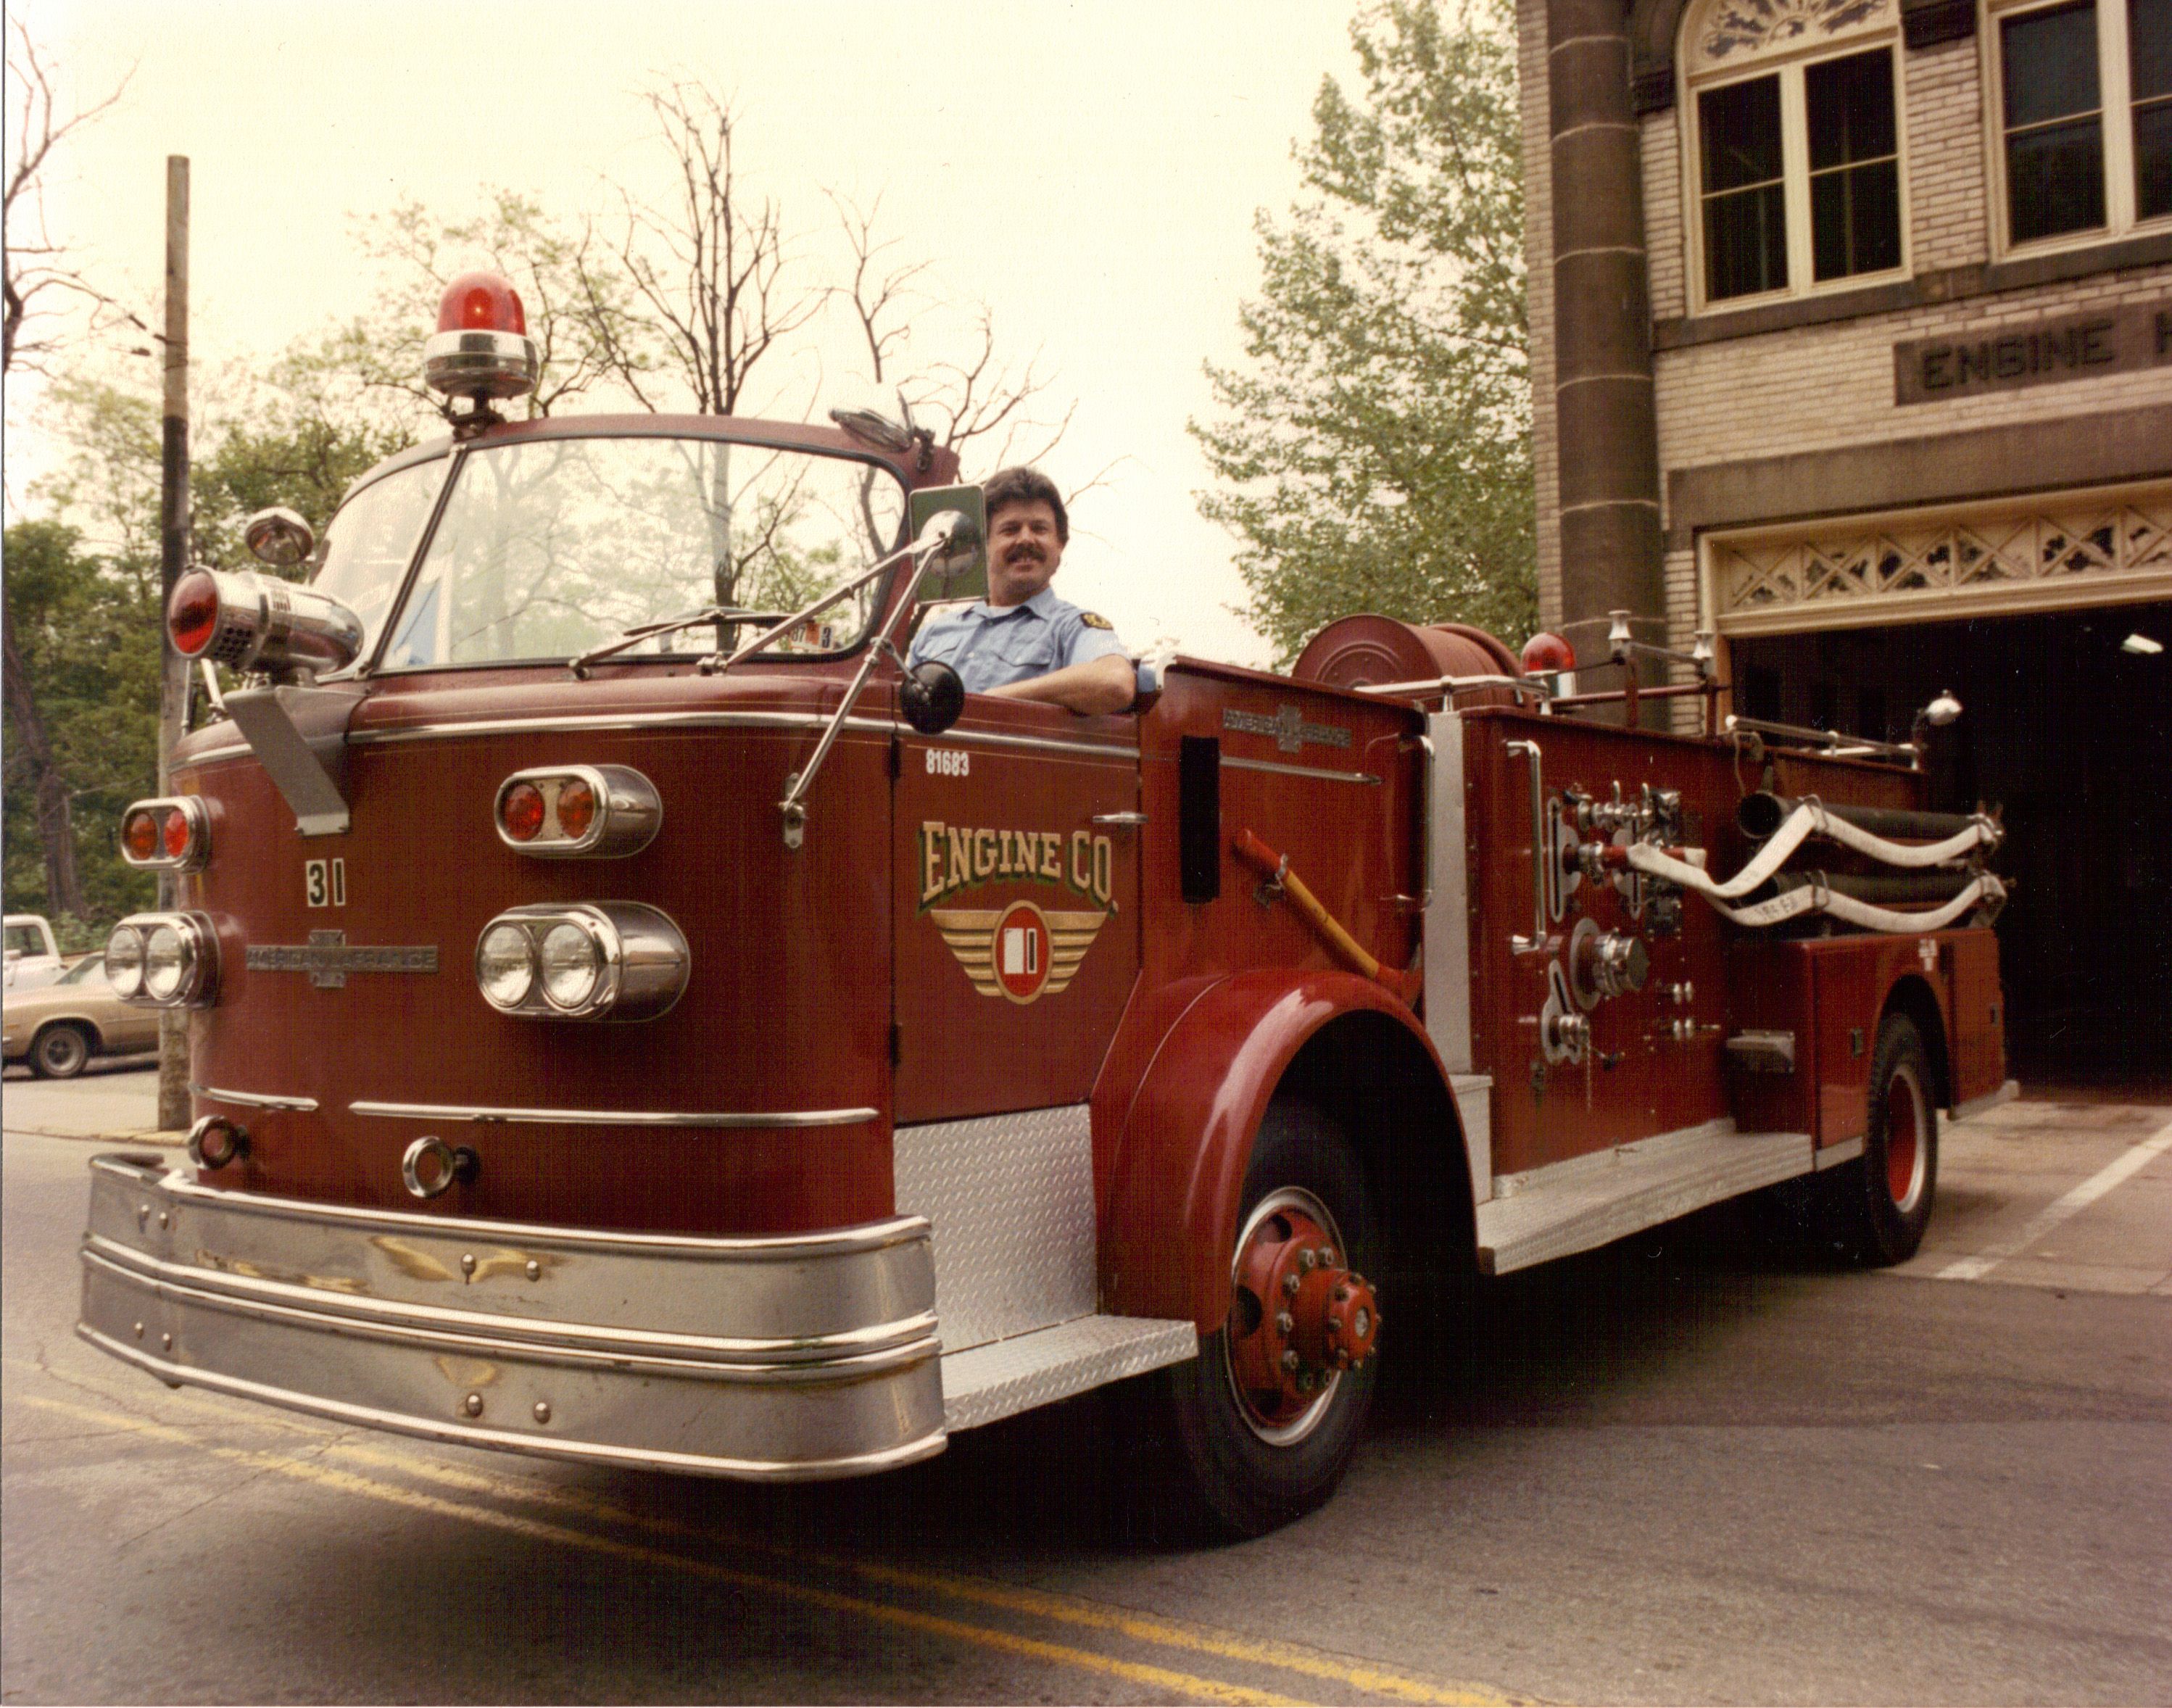 Pin by Bob Ireland on Pittsburgh | Pinterest | Fire trucks, Fire ...